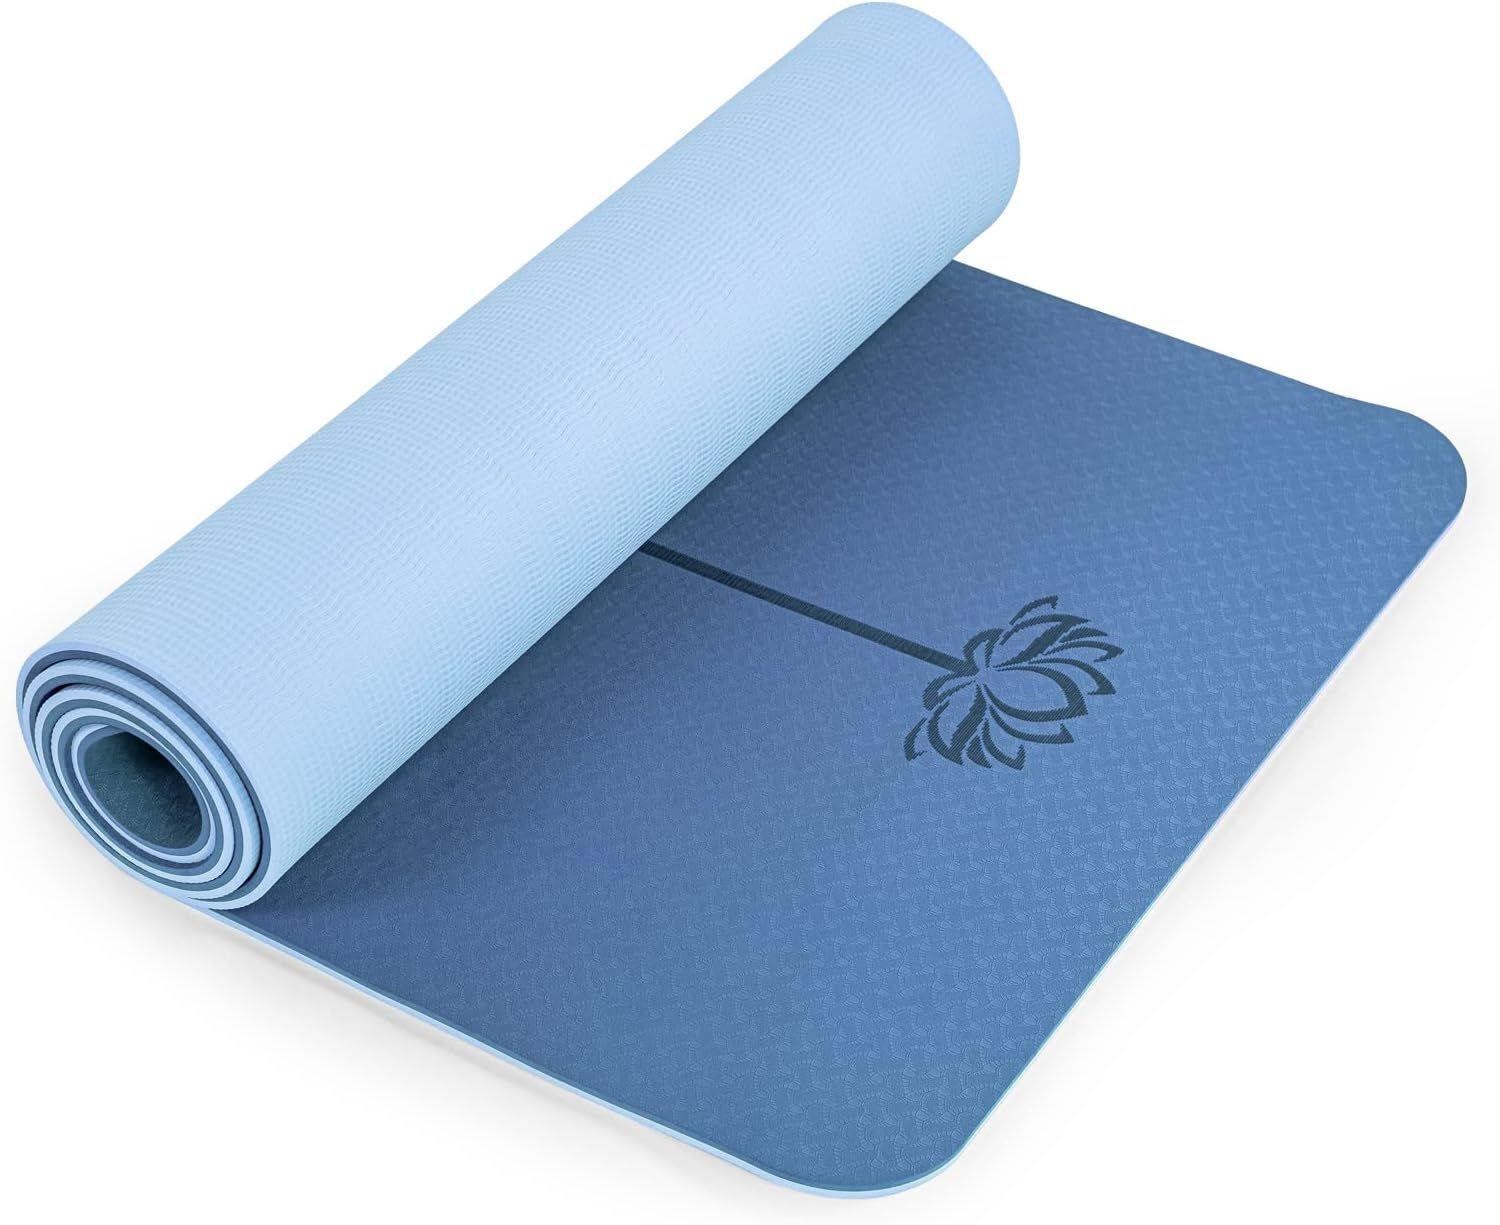 USED $36 Yoga Mat